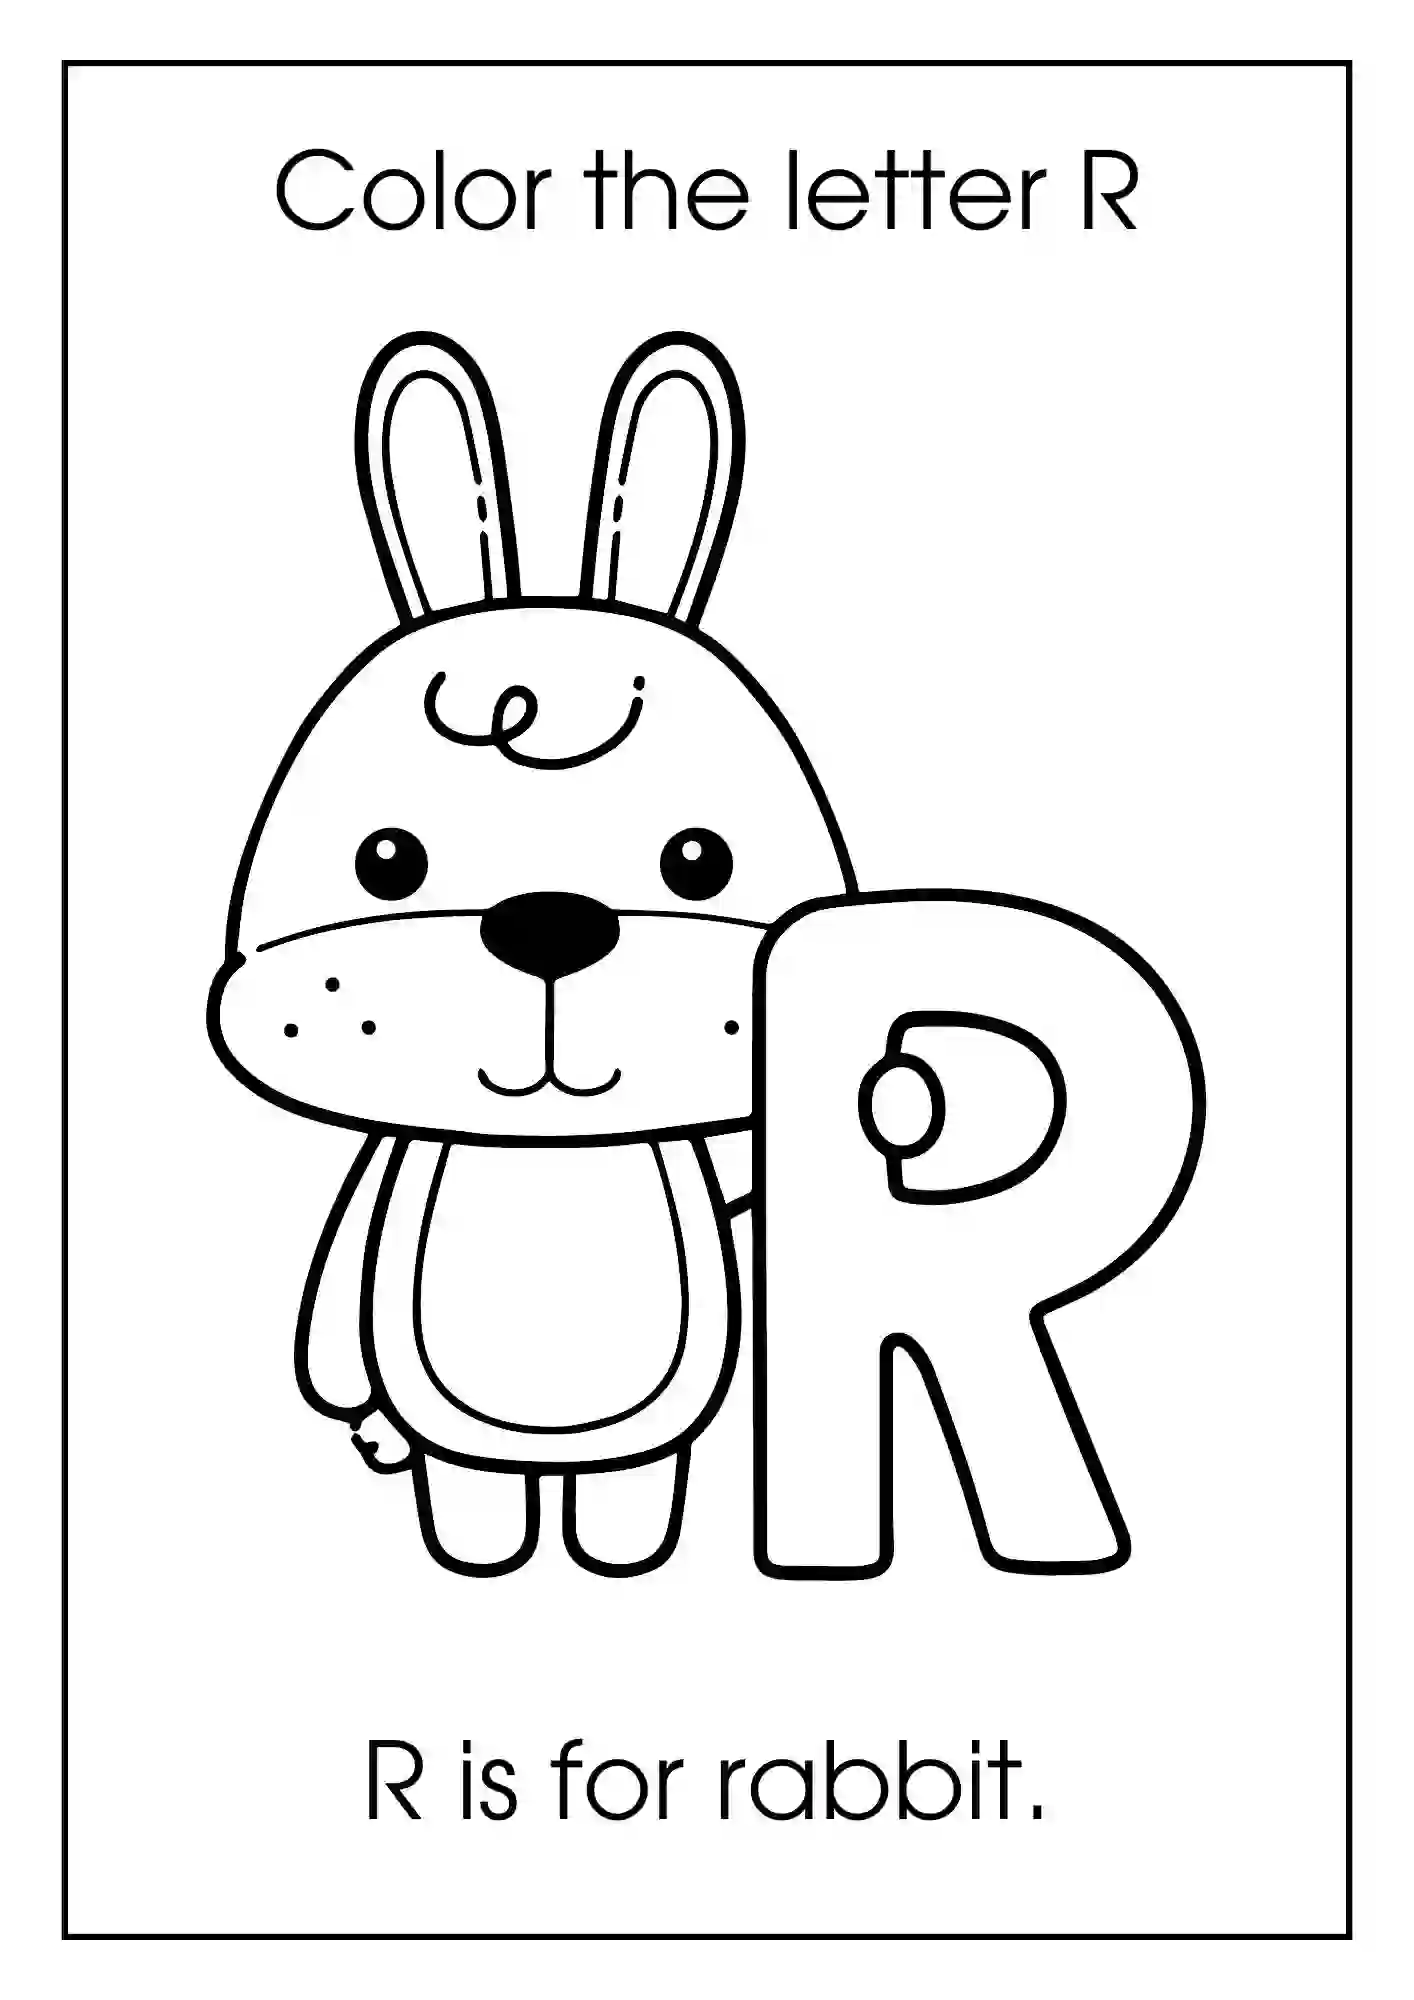 Animal Alphabet Coloring Worksheets For Kindergarten (Letter r with rabbit)